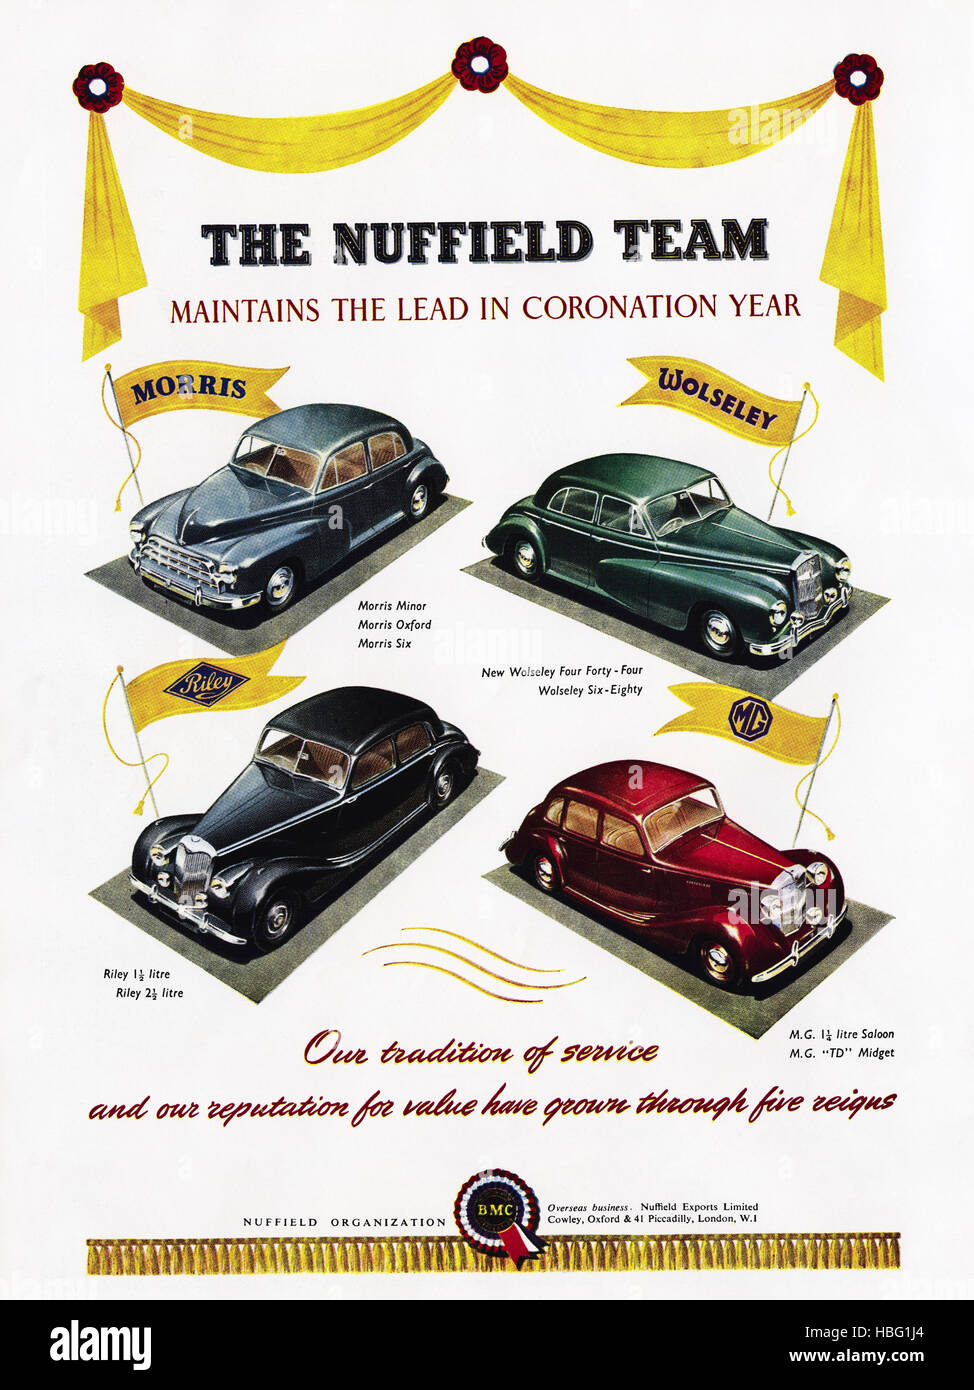 1961 Plymouth Fury Original Vintage Retro Classic Car Advertisement Magazine Ads